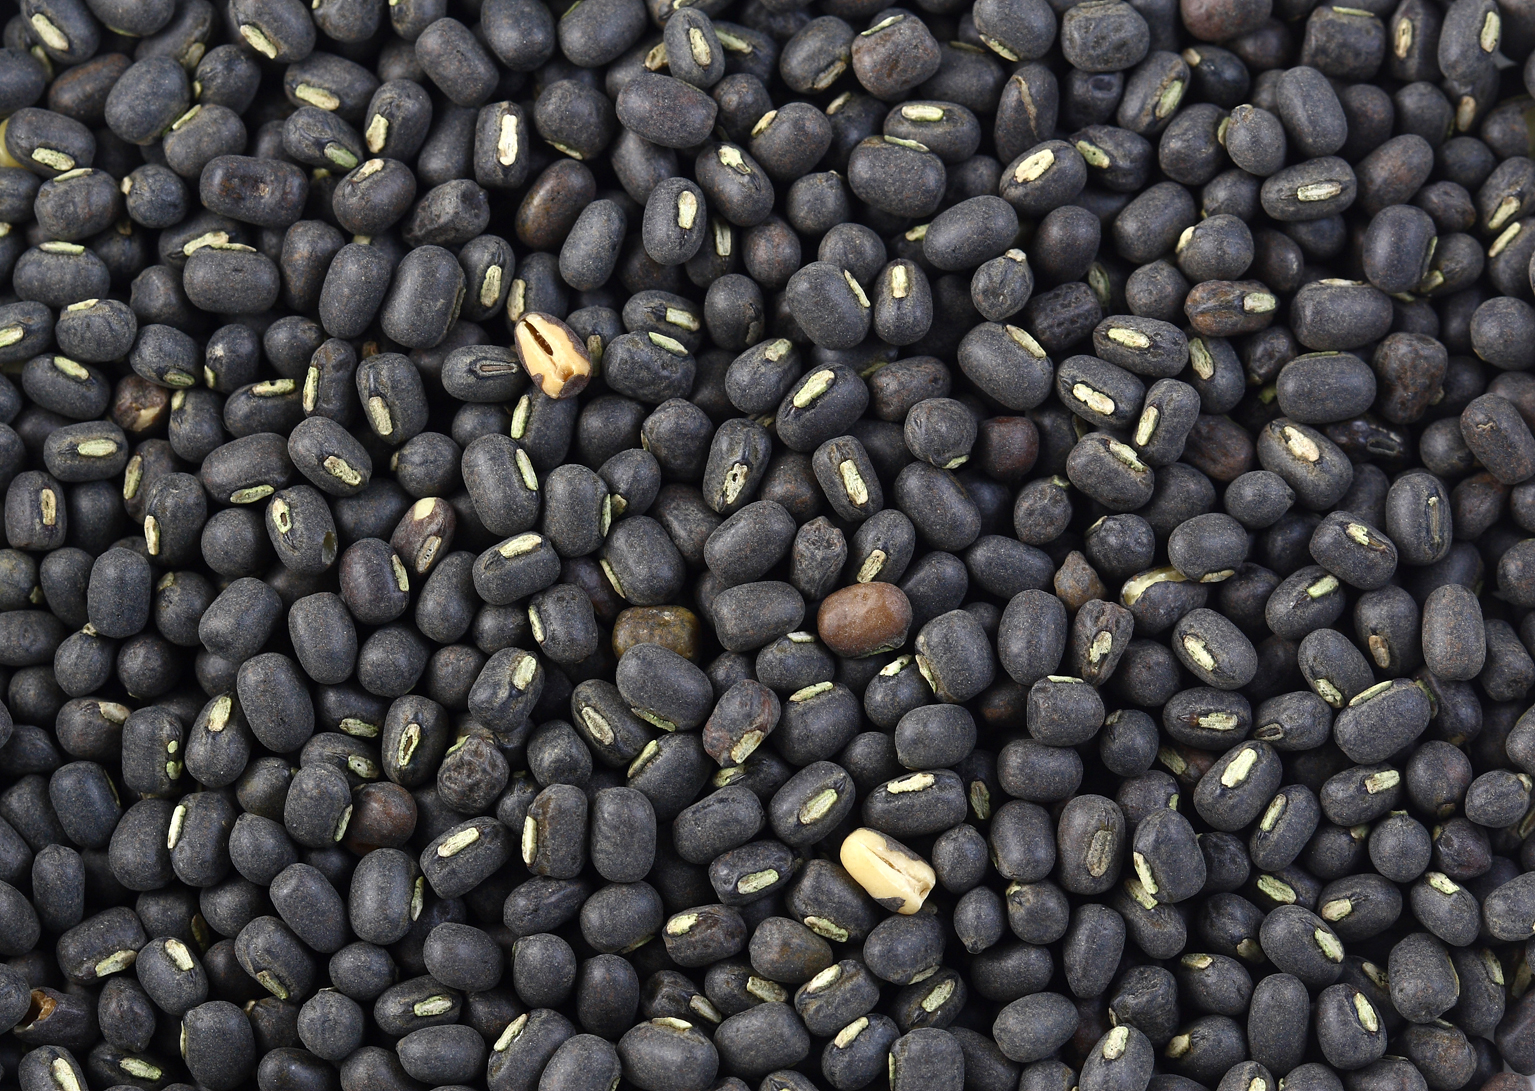 Seeds-of-Black-gram